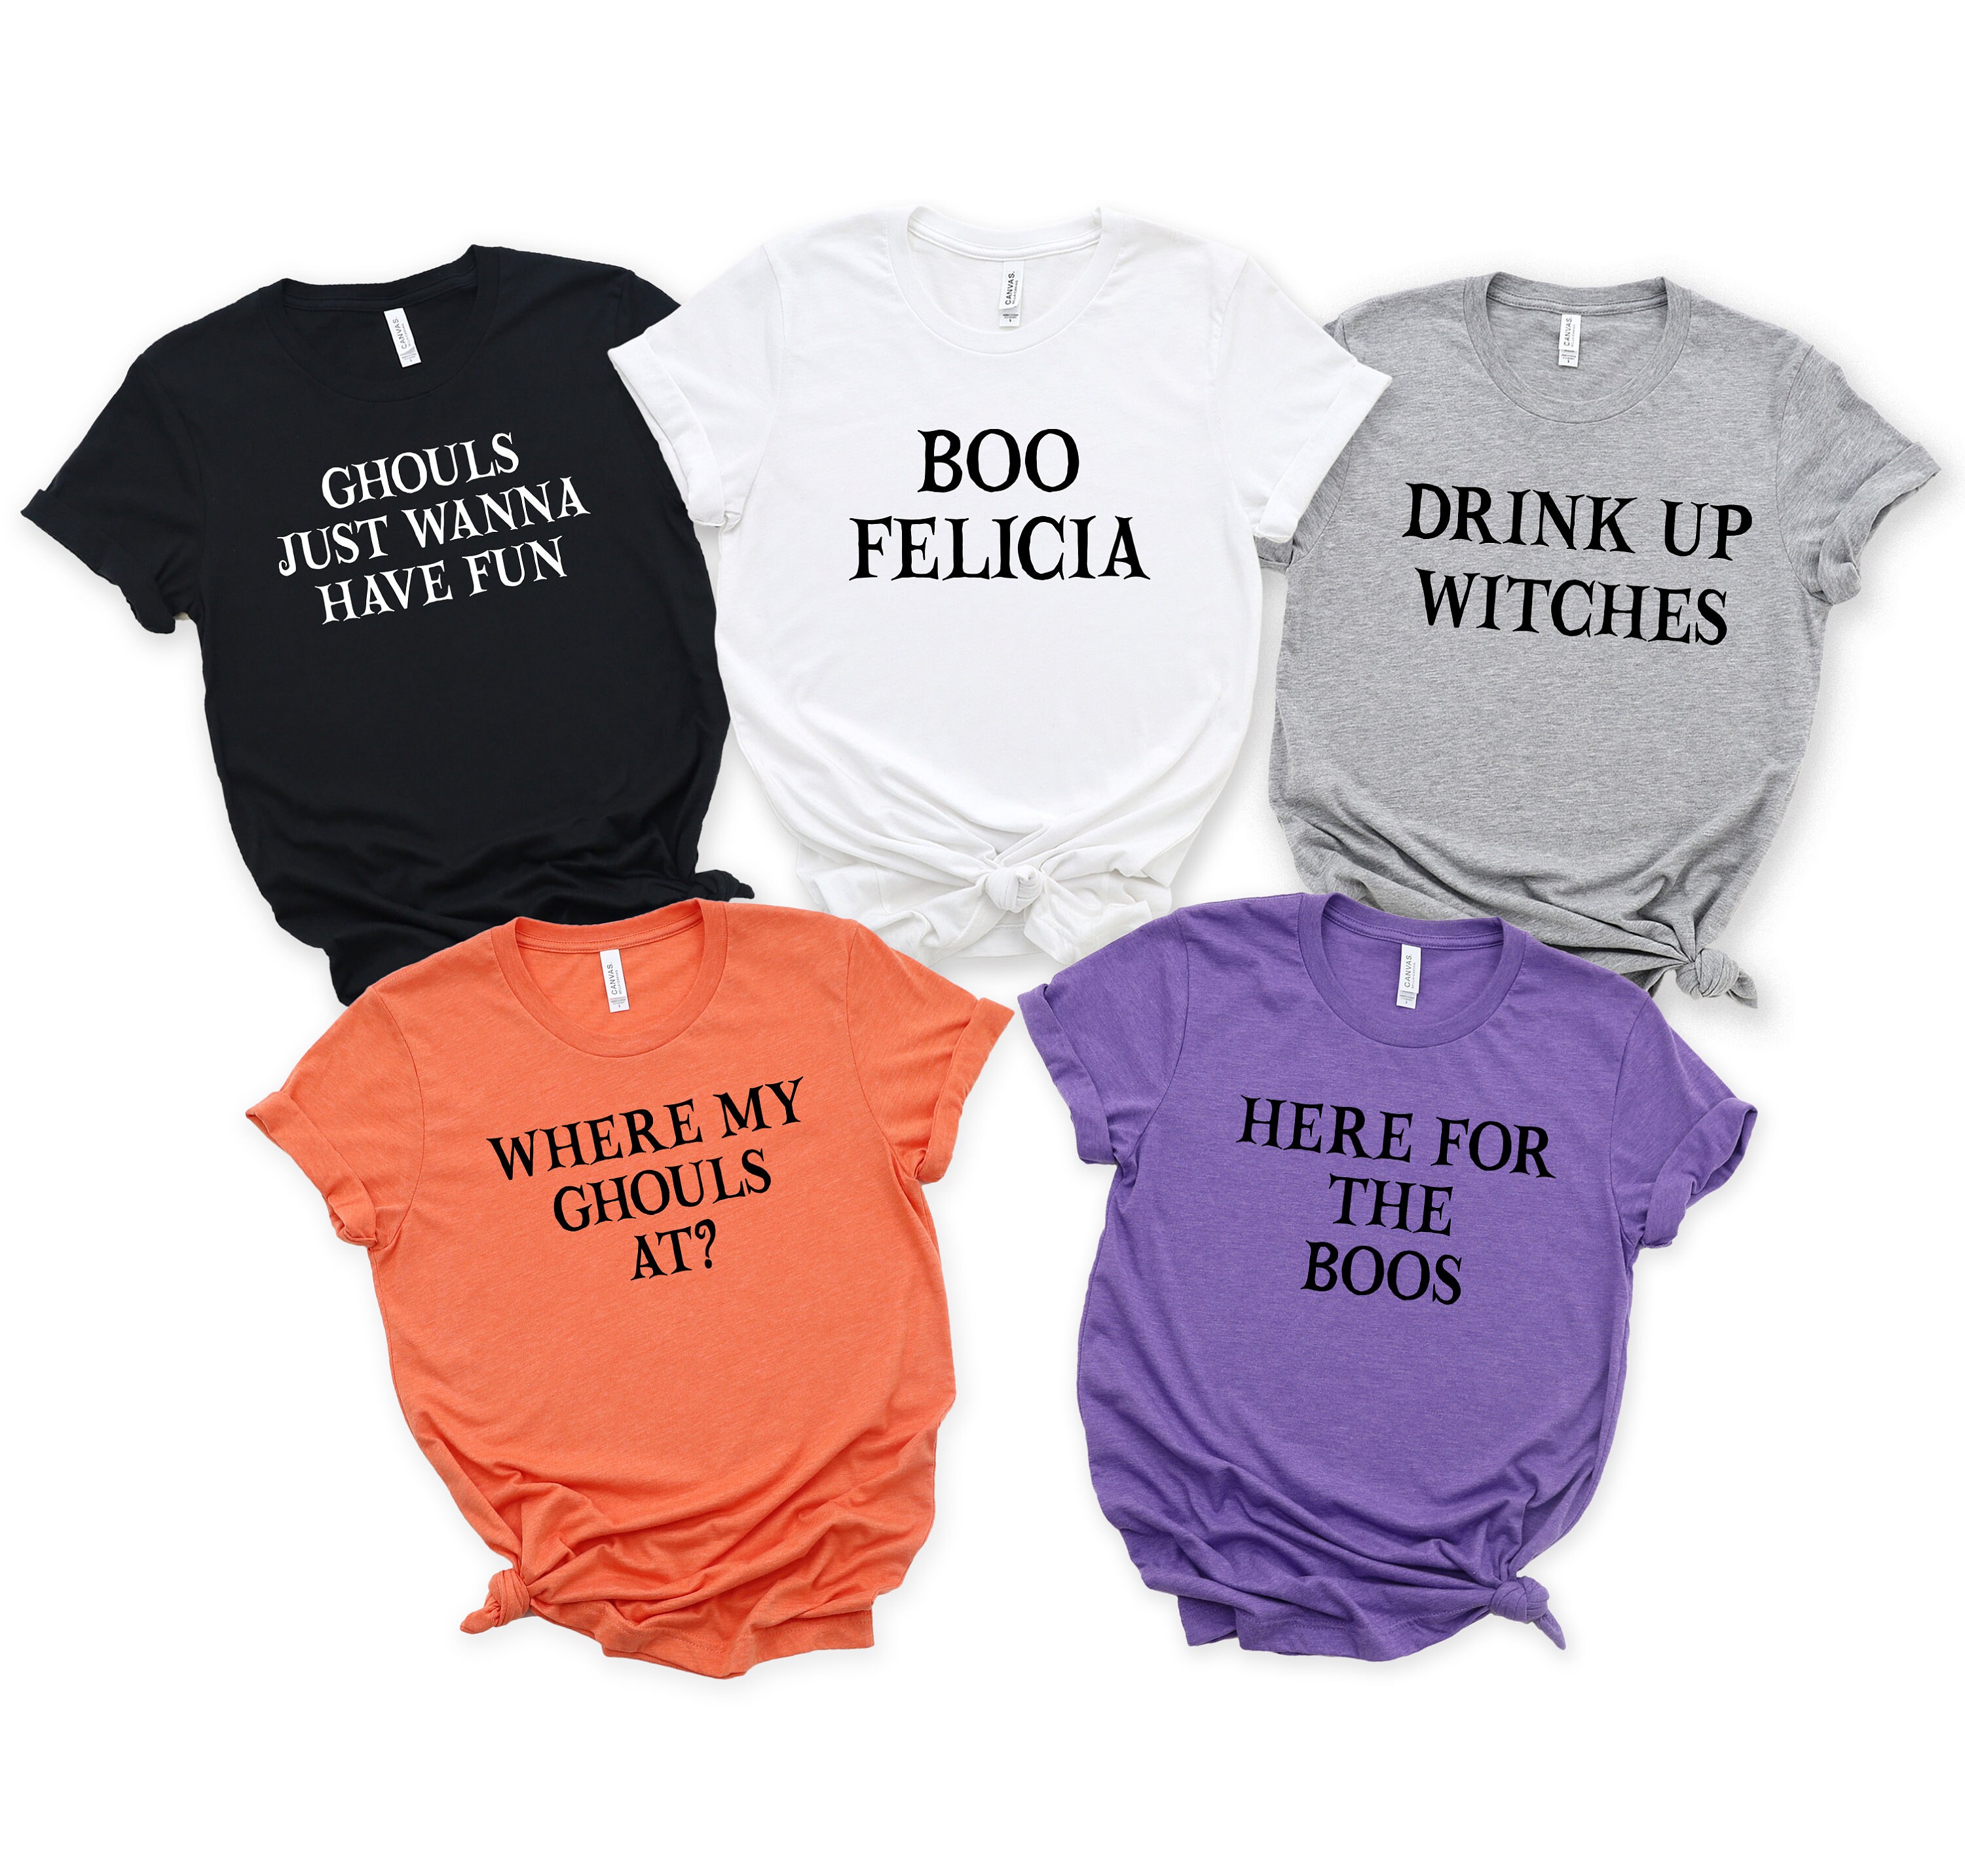 Halloween Group T-shirts Funny Group Halloween Shirts photo